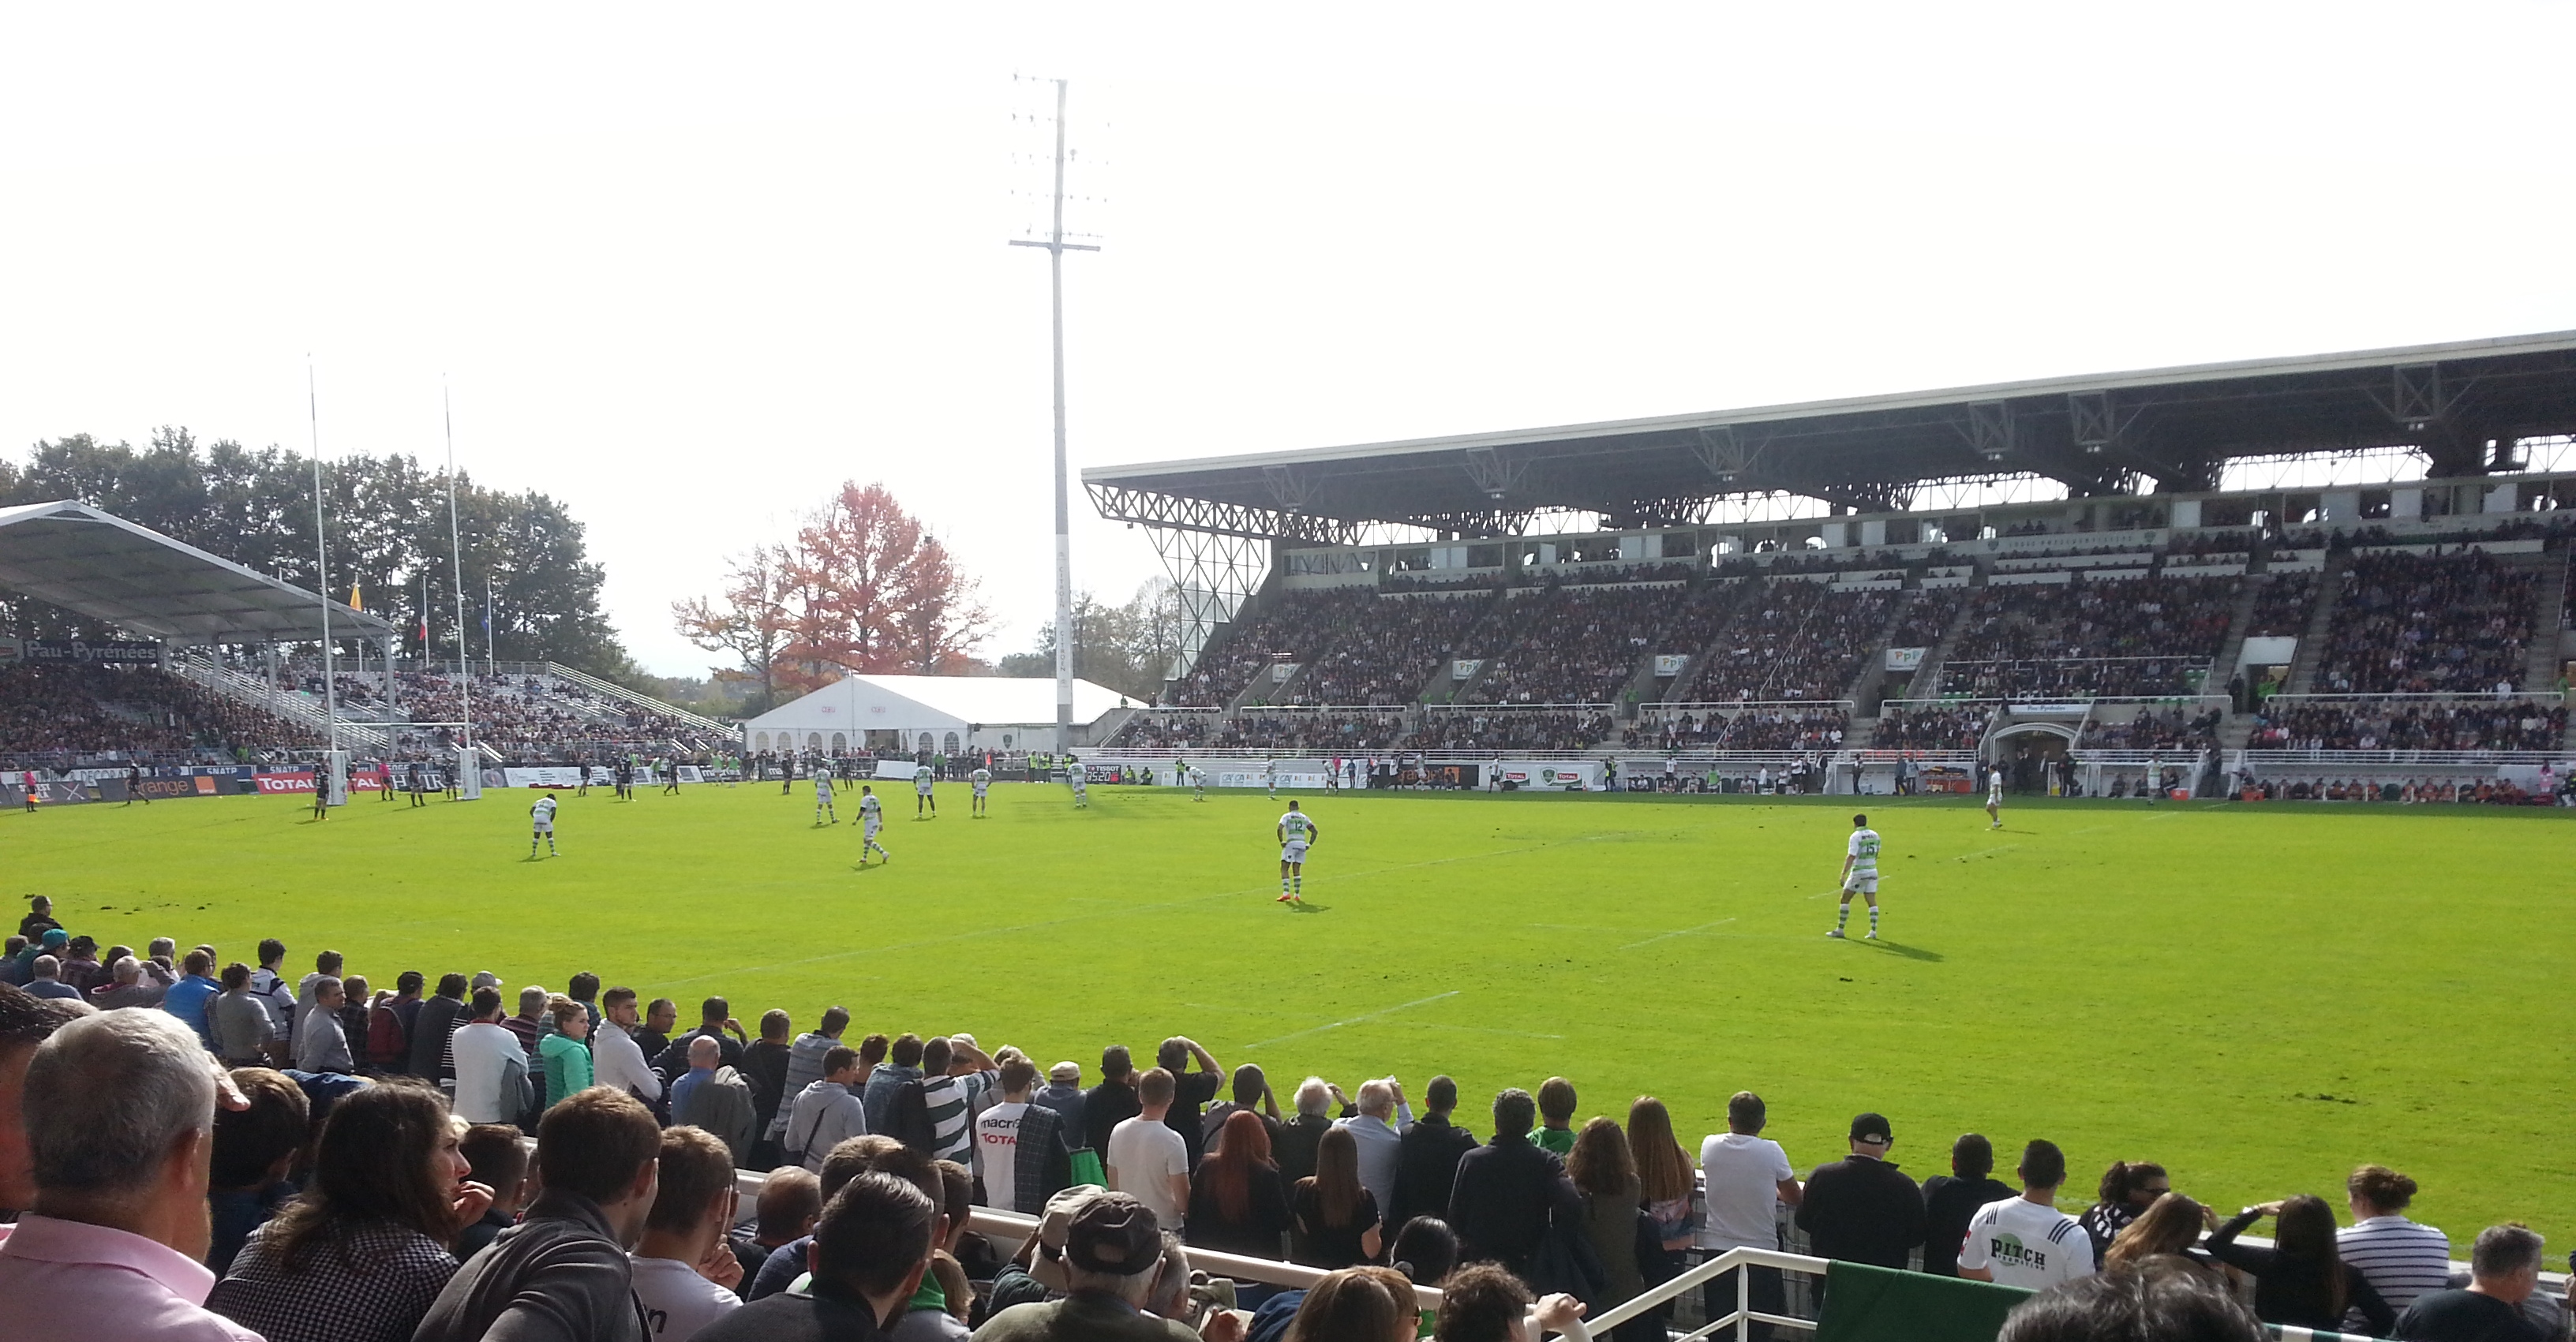 File:Stade du hameau.jpg - Wikimedia Commons